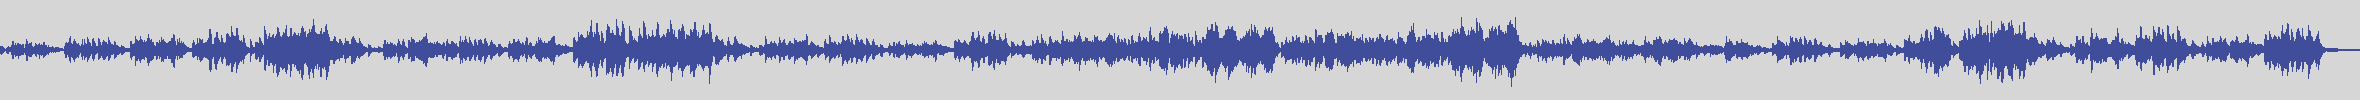 big_music_classic [BMC001] Frédéric Chopin, C Red - Mazurka Op.17 N.3 [] audio wave form